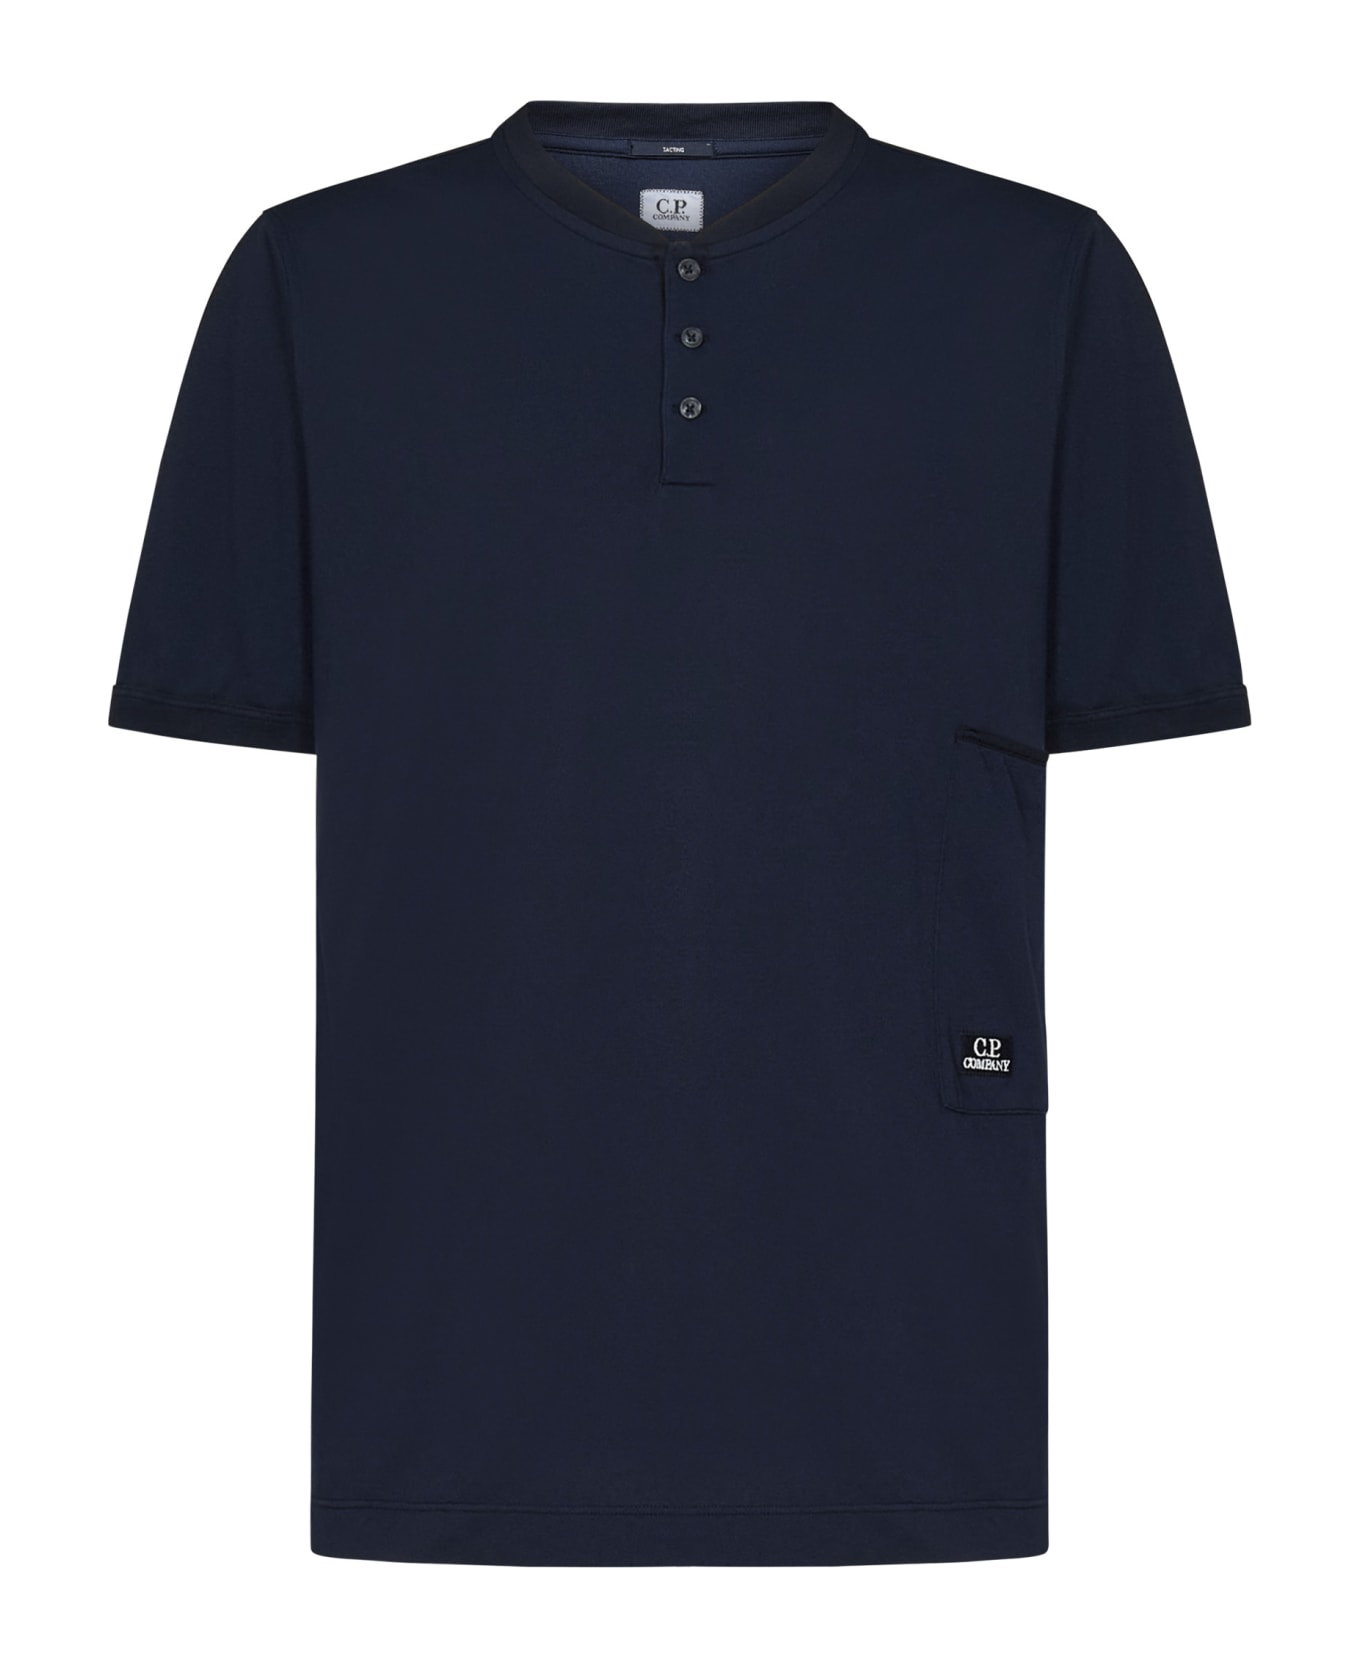 C.P. Company T-shirt - Blue シャツ